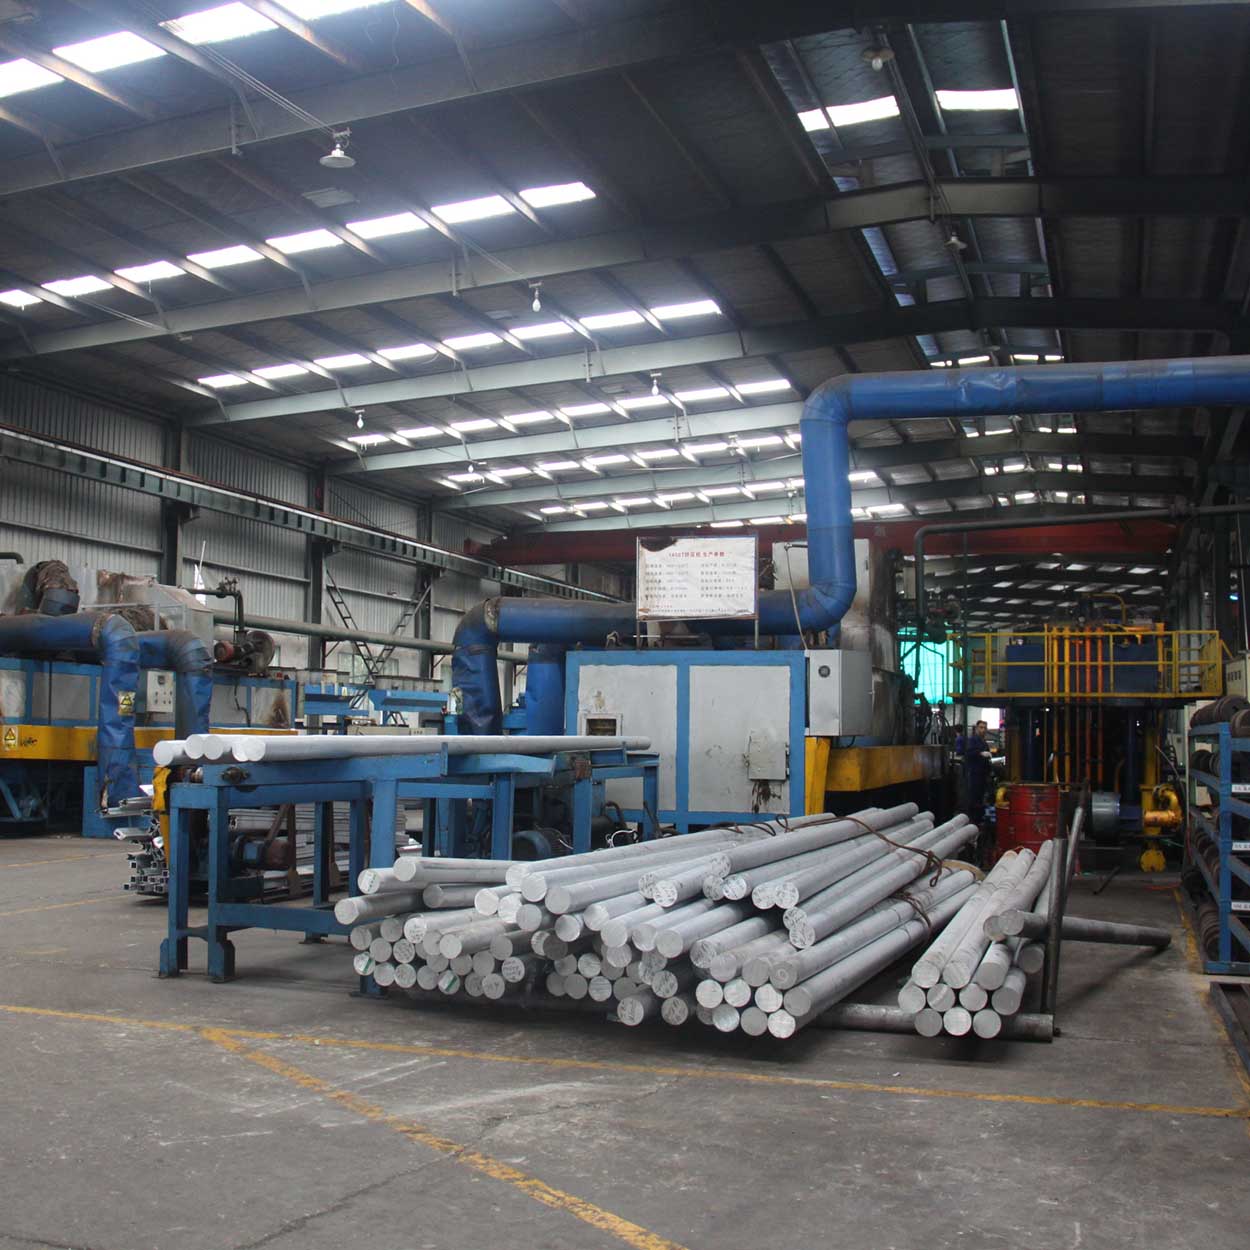 Aluminum extrusion production process